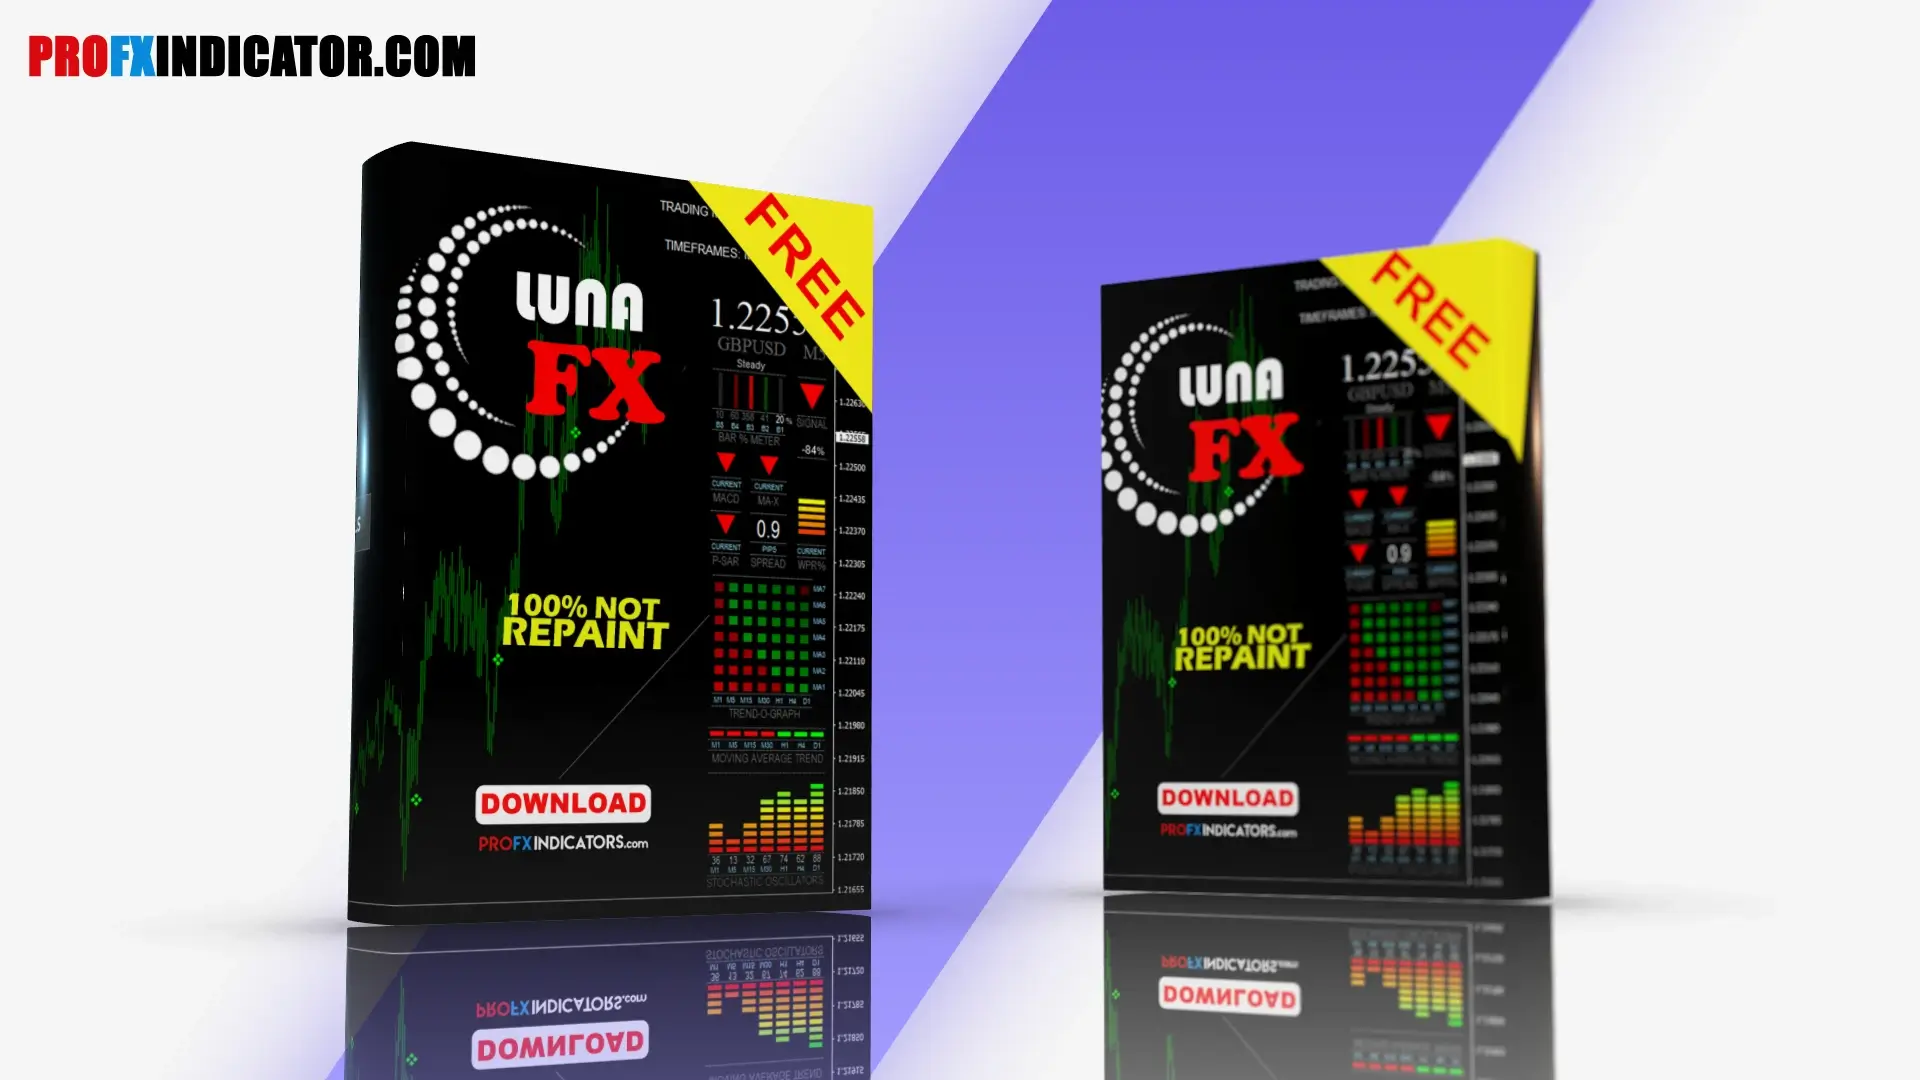 Luna FX - 100% not repaint MT4 trading system